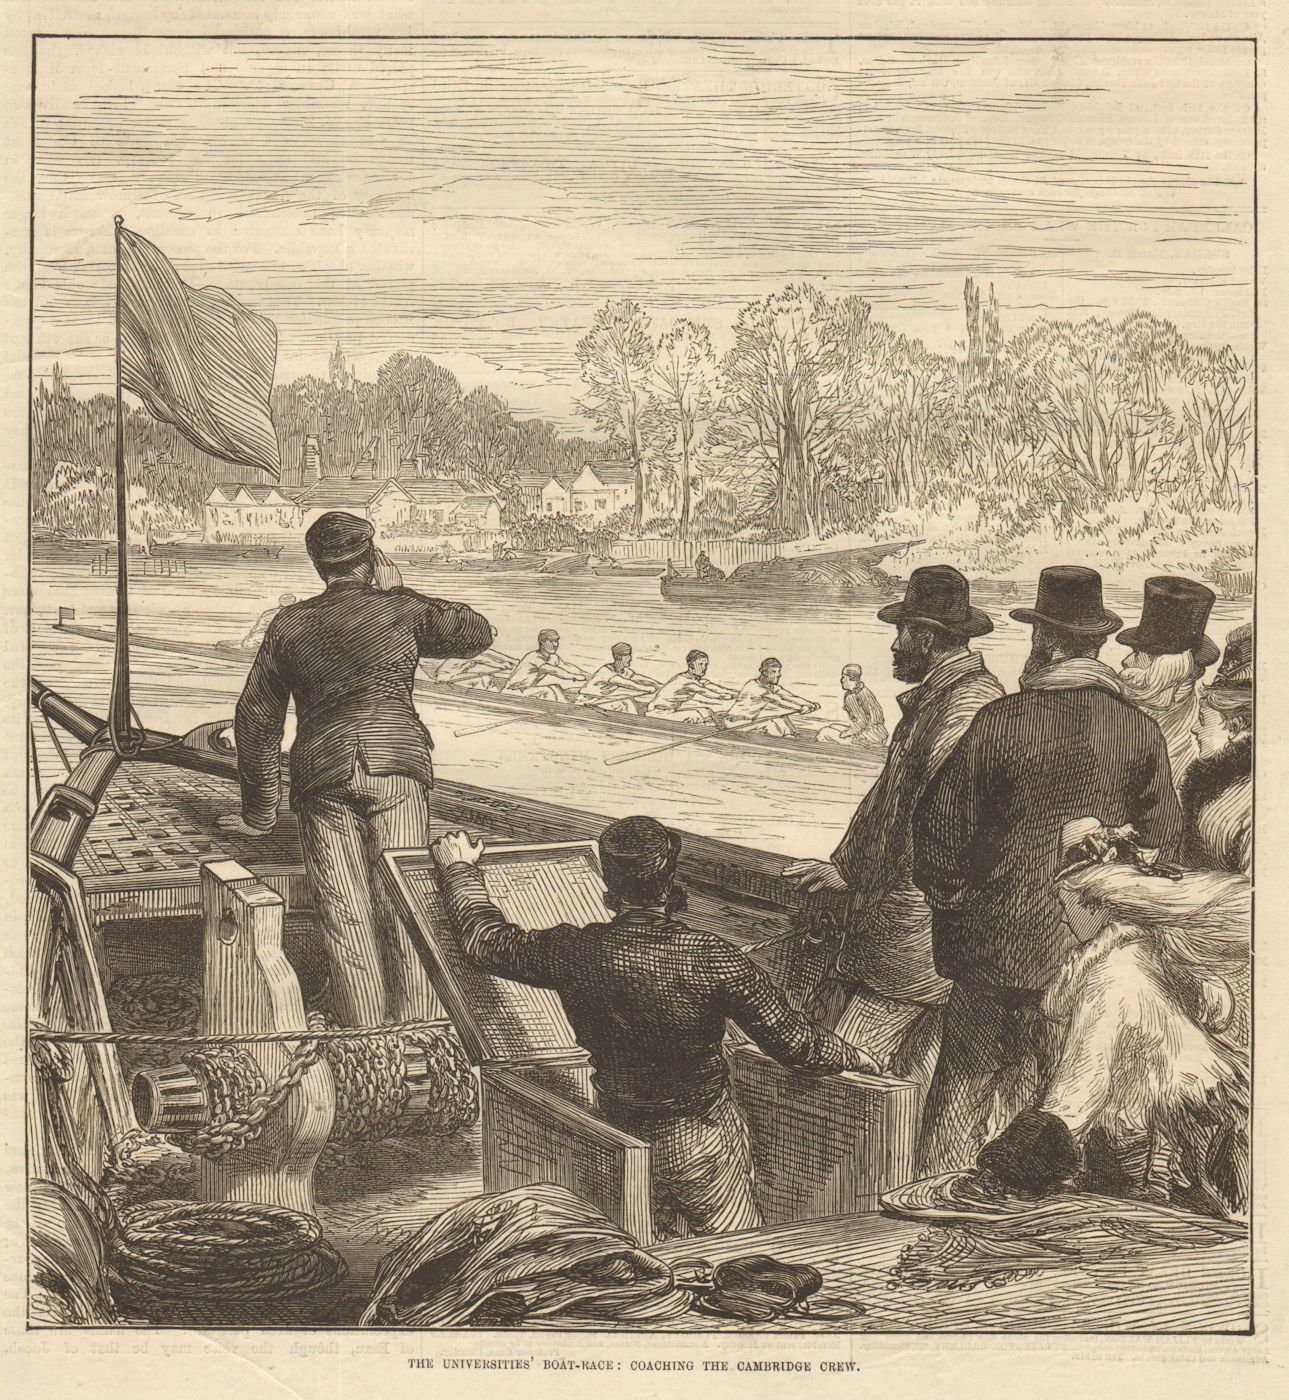 Associate Product The universities' boat-race: coaching the Cambridge crew. Rowing 1875